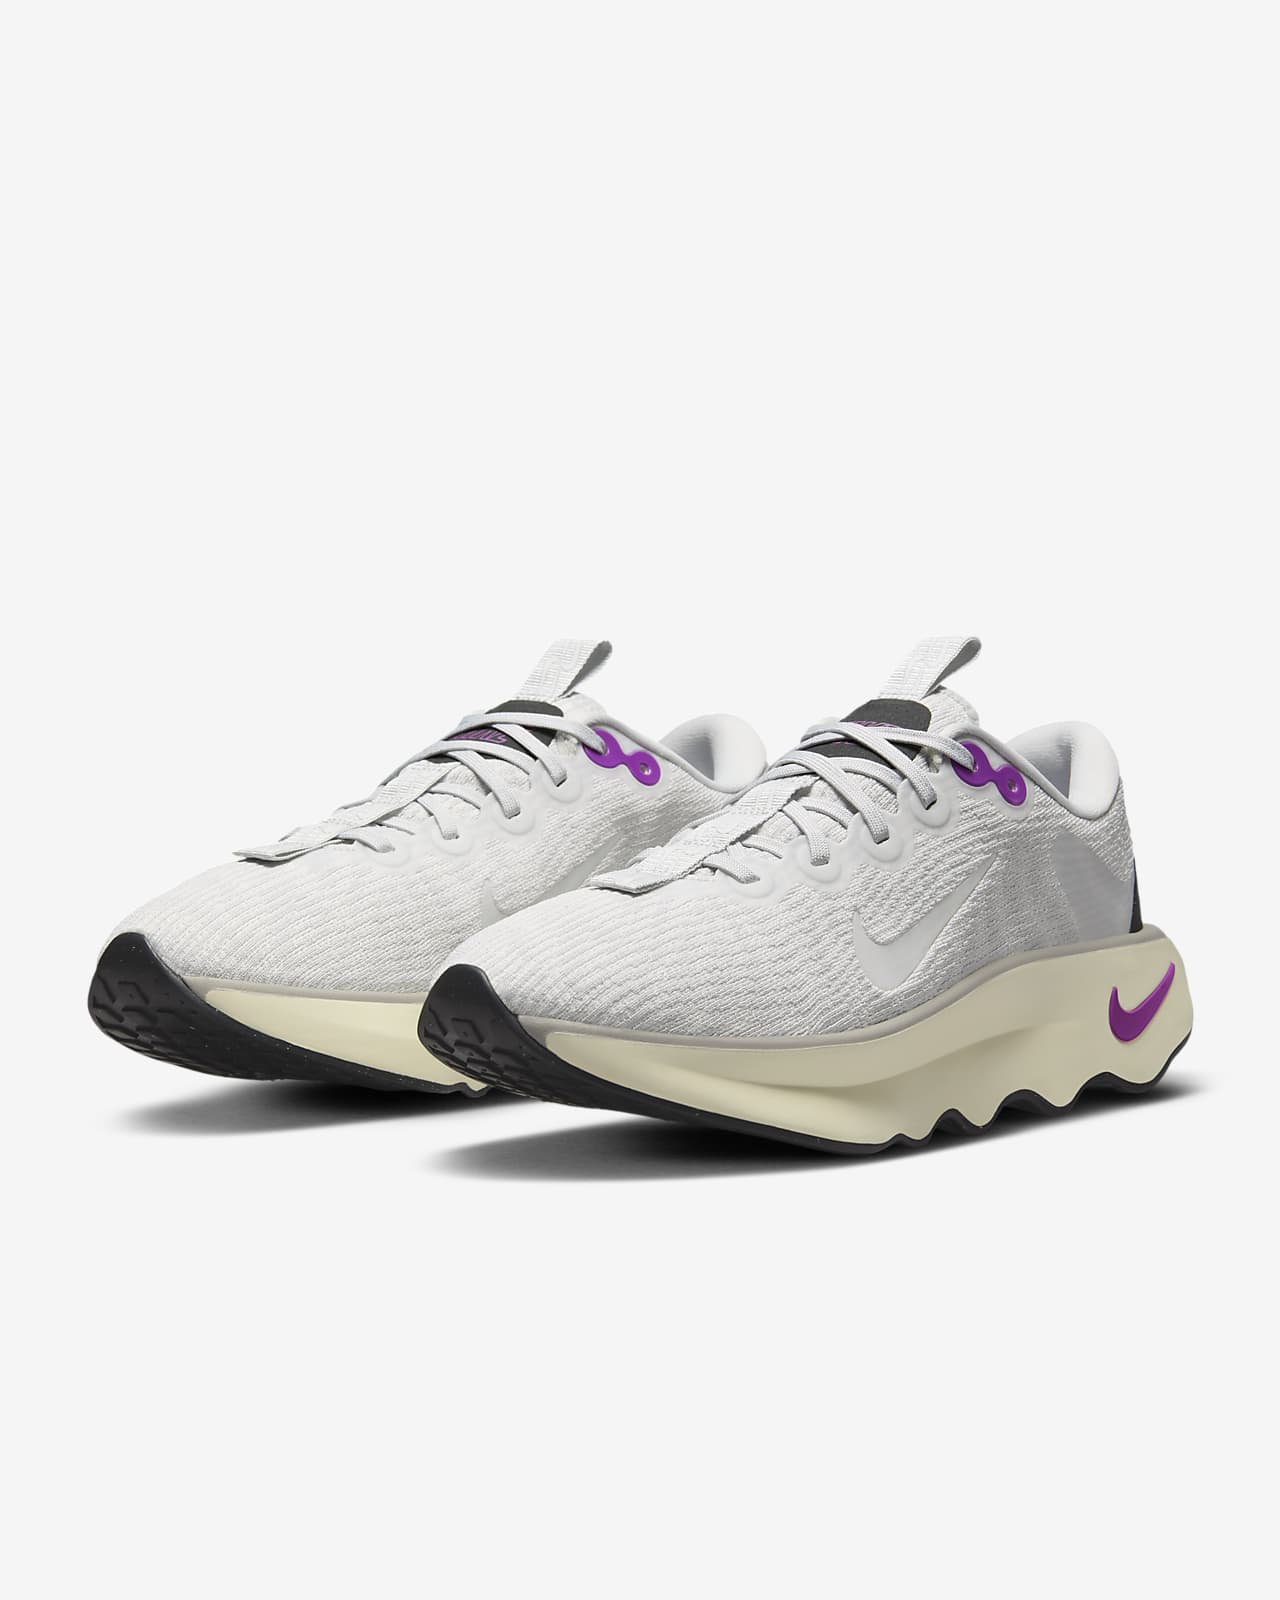 Nike Motiva Women's Walking Shoes.